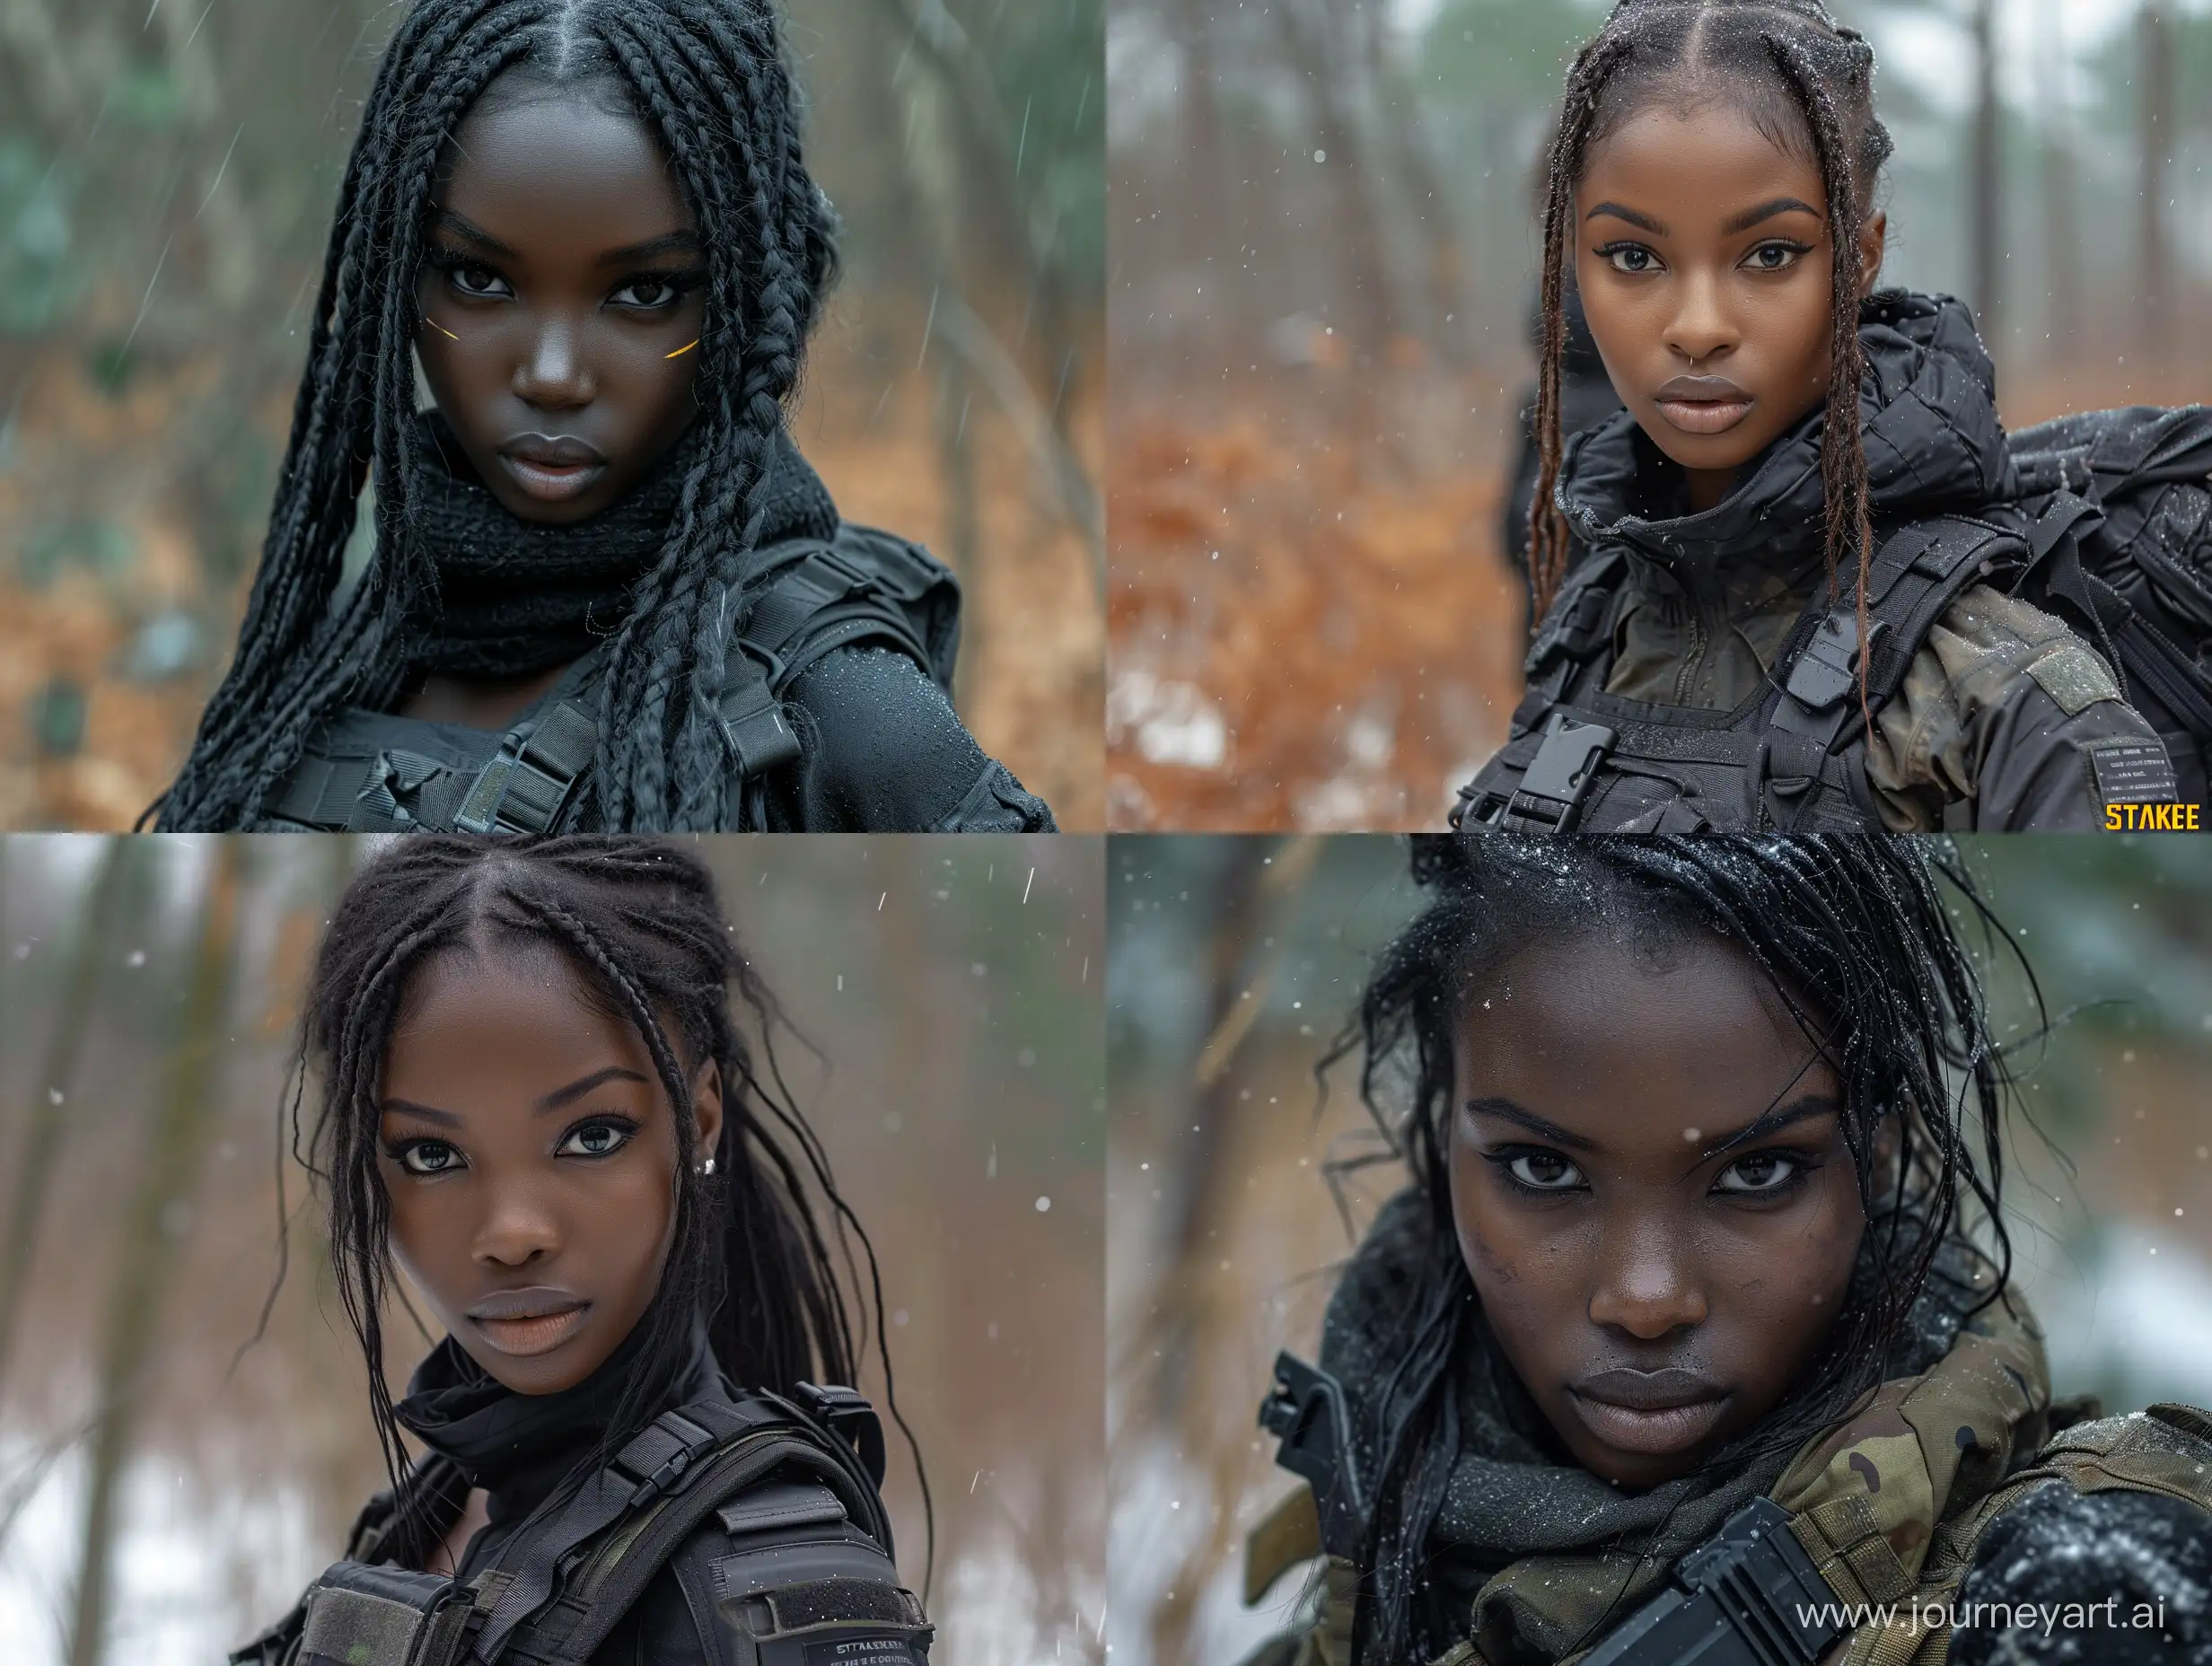 Stylish-Ebony-Female-Mercenary-Amidst-Dead-Trees-in-STALKER-Setting